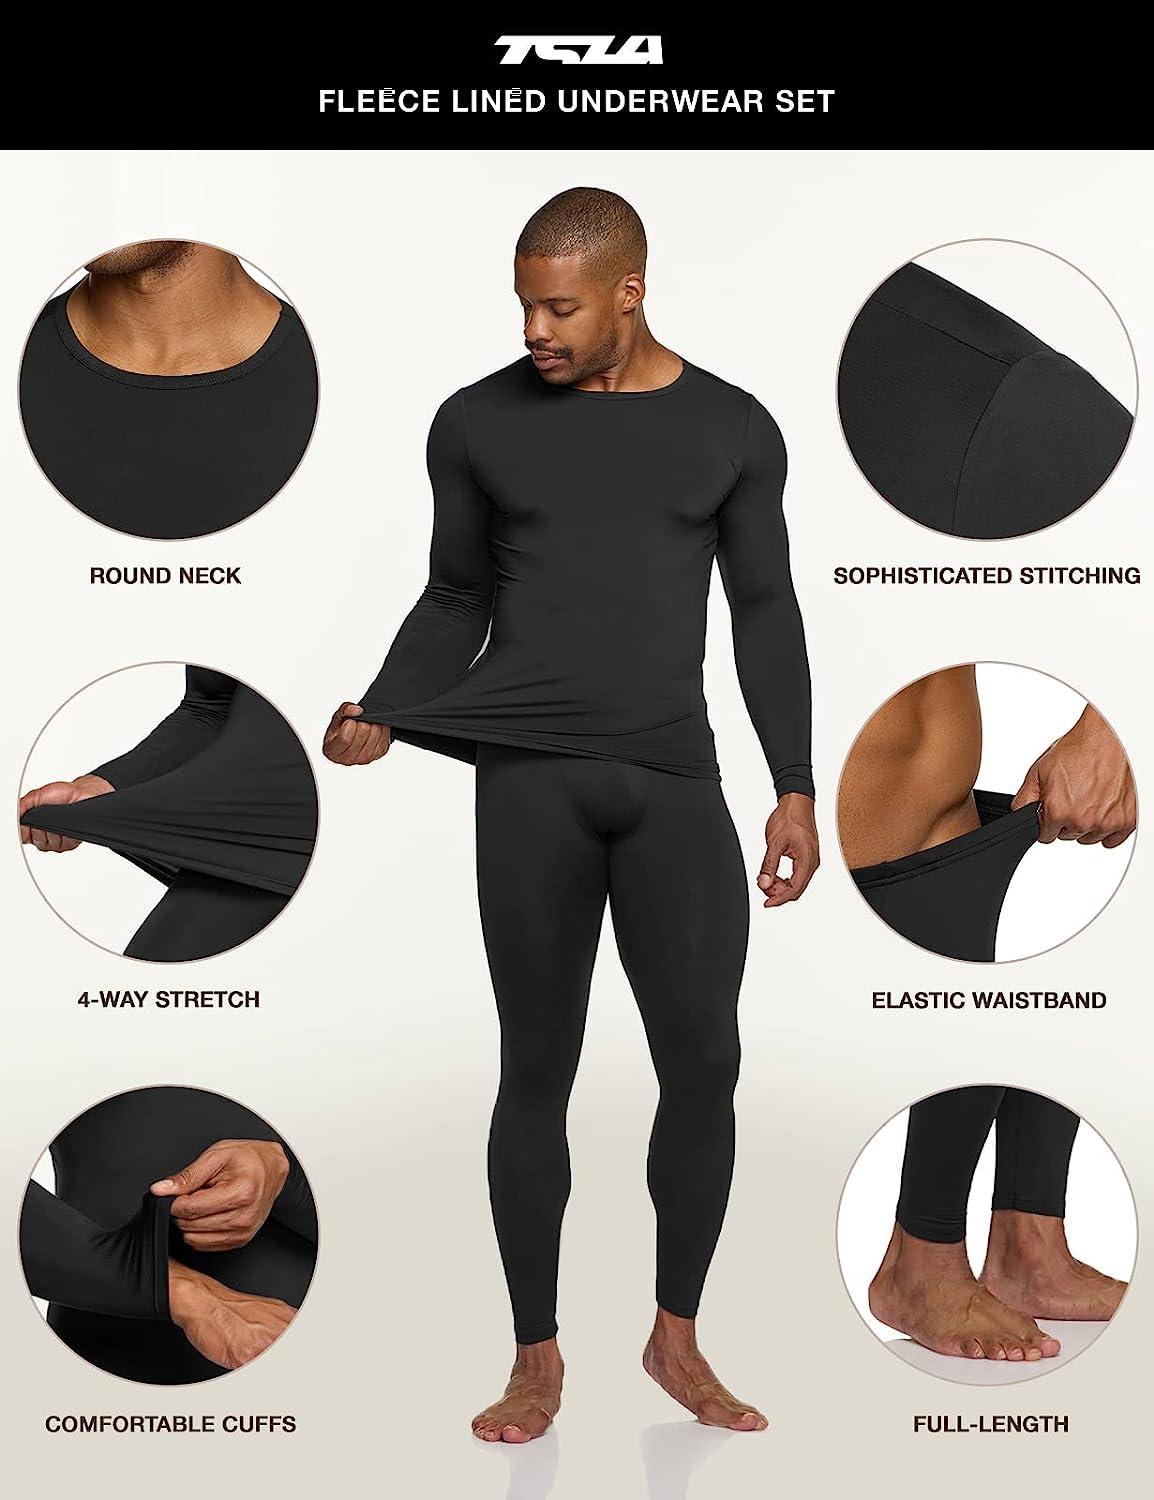 Men's Thermal Underwear & Base Layers